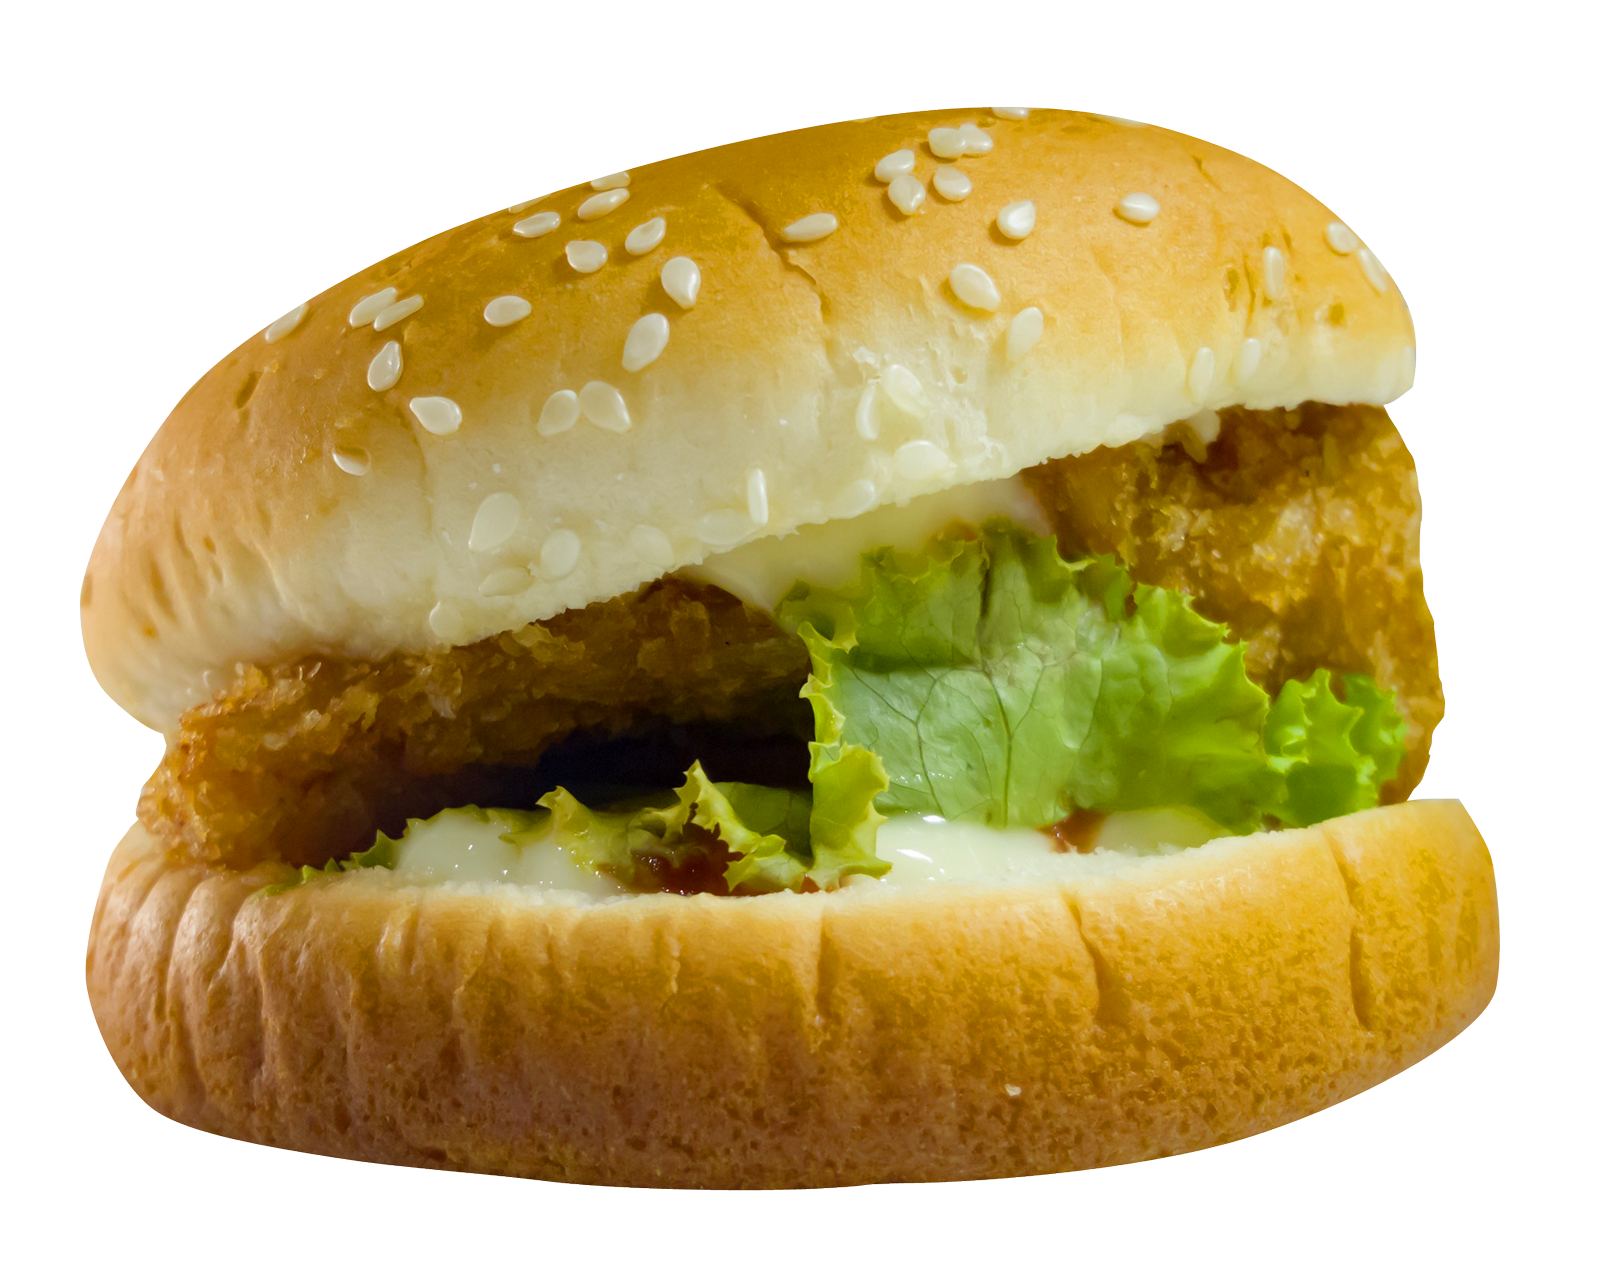 Food Burger Junk PNG Image High Quality PNG Image